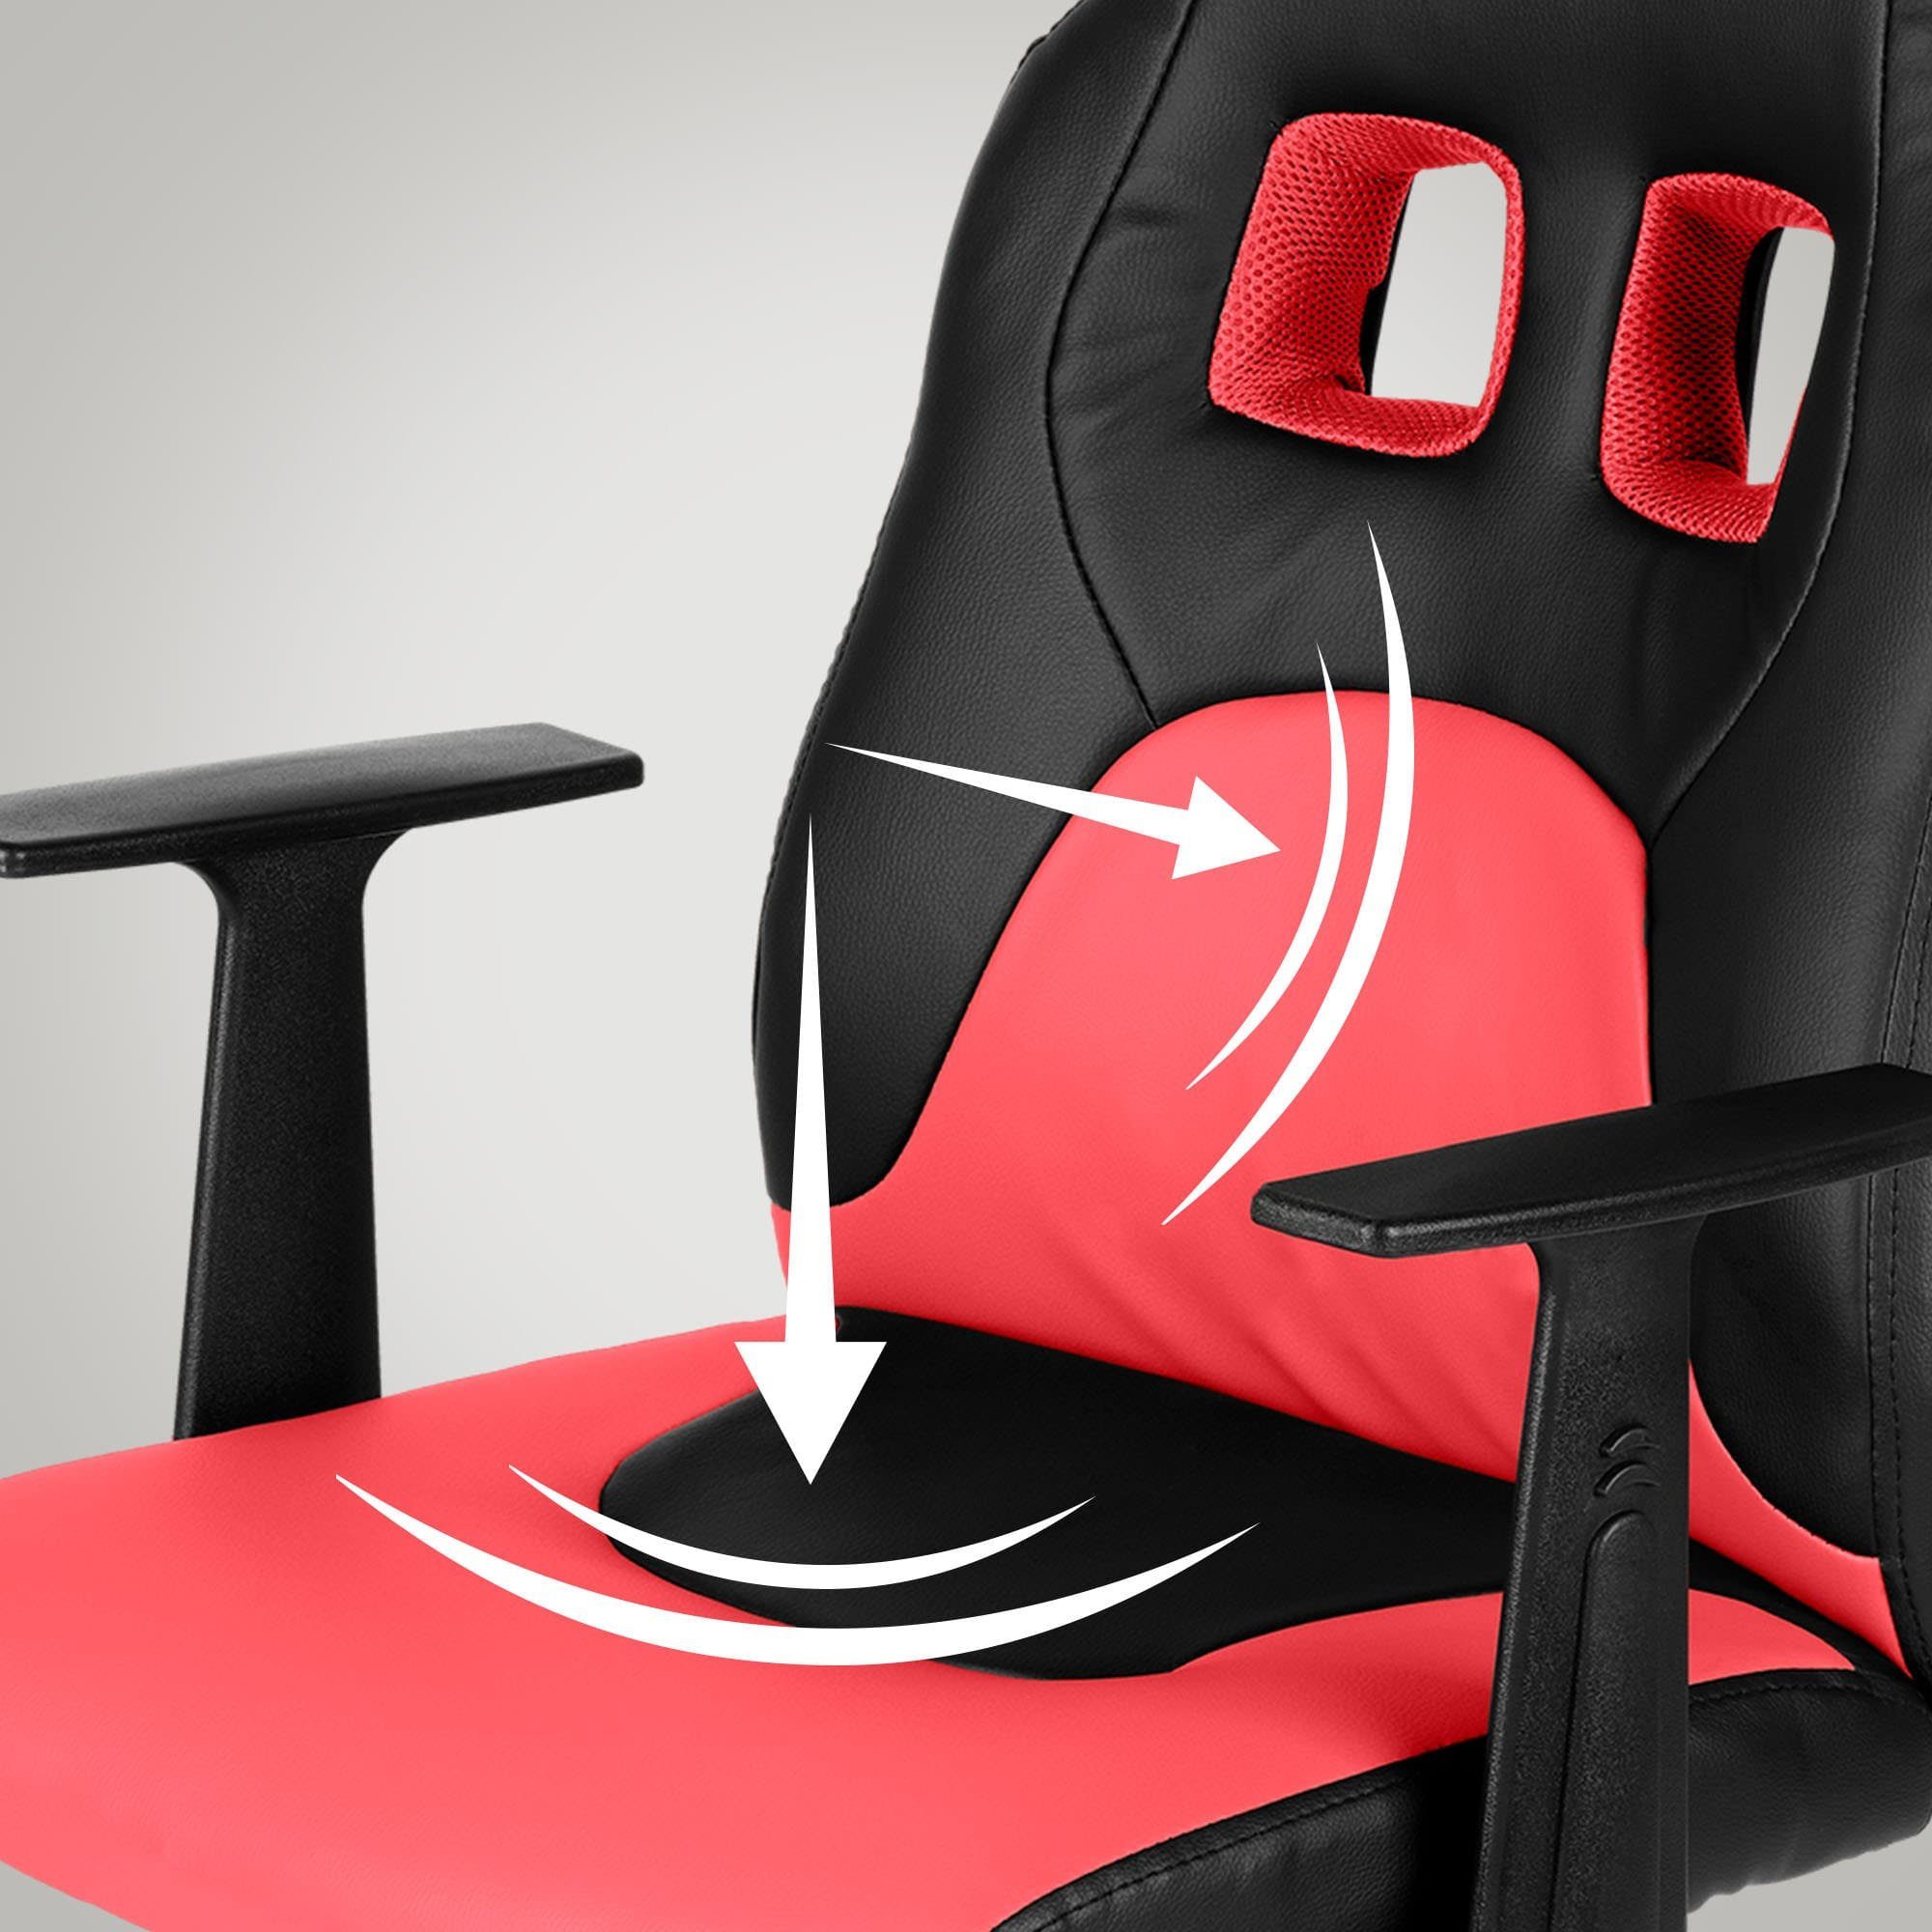 CLP Gaming Chair Fun, Kinder-Bürostuhl, Armlehnen mit schwarz/rot abnehmbaren